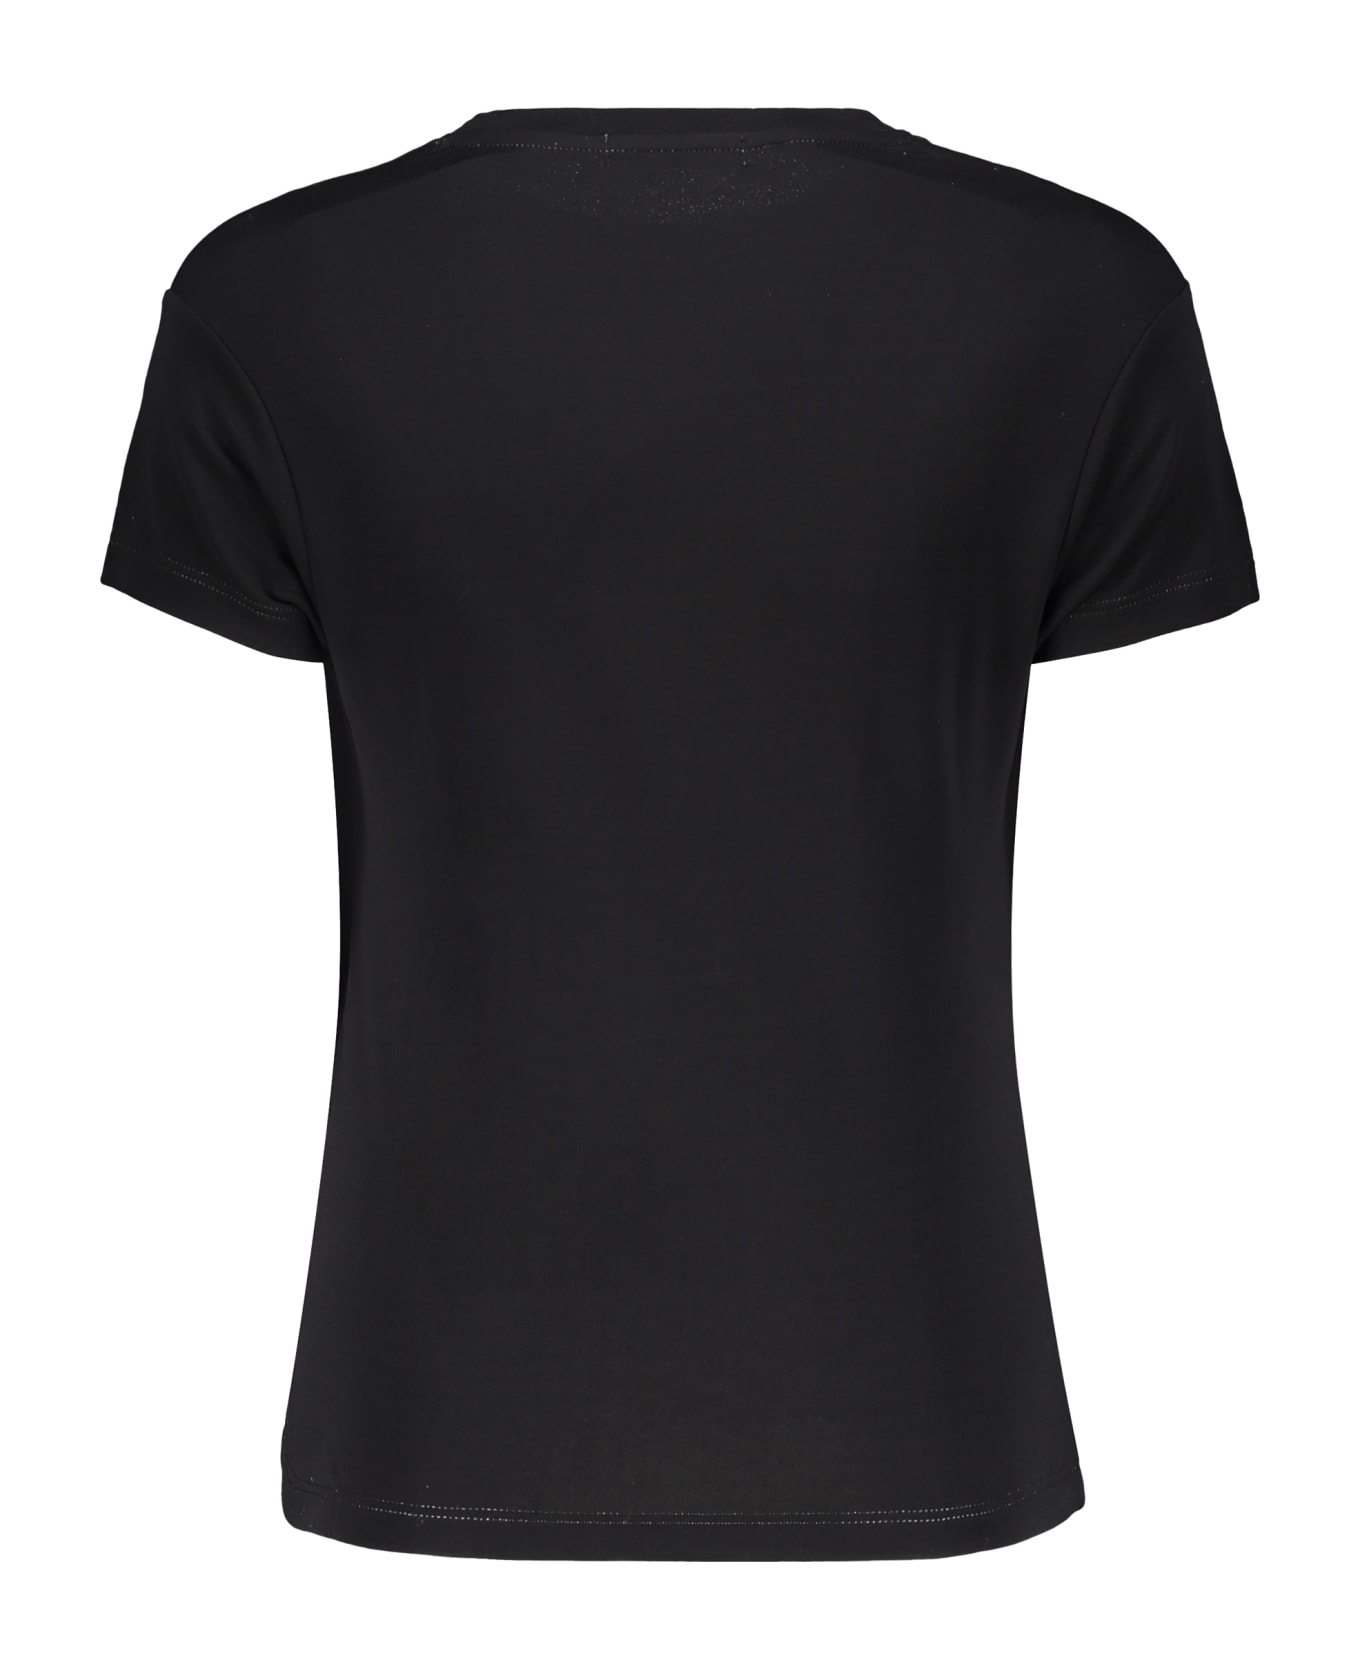 AMBUSH Viscose T-shirt - black Tシャツ